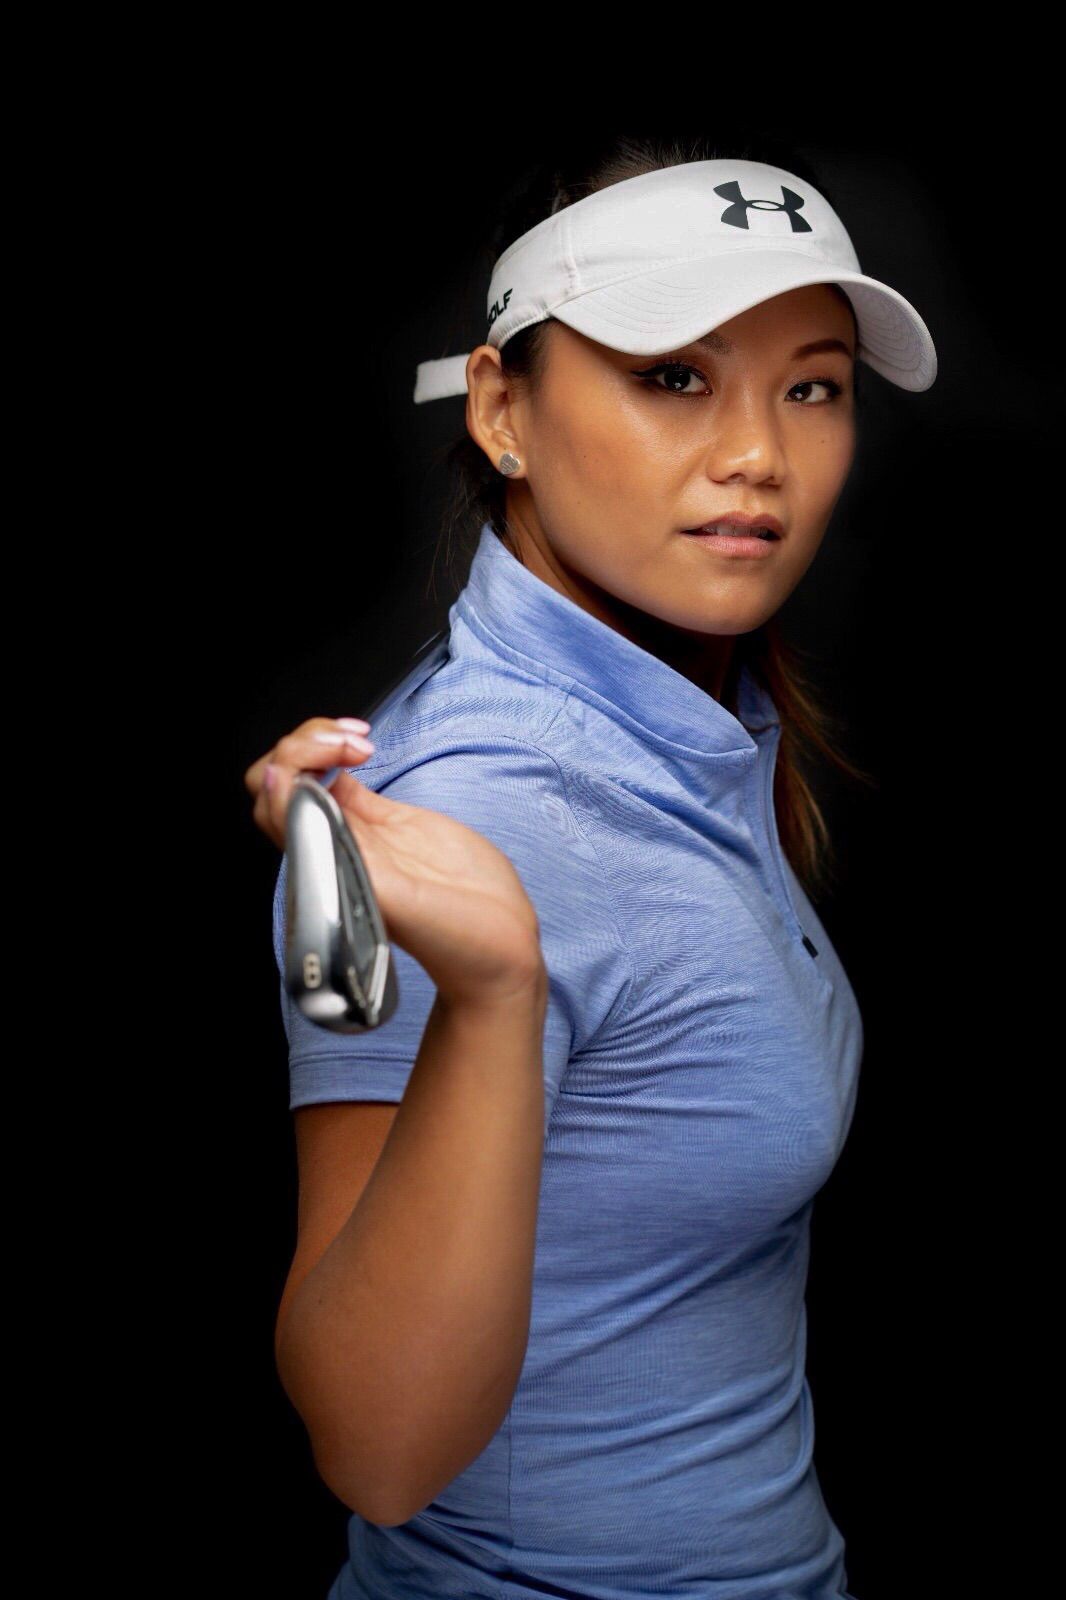 Joyce Chong Golf professional player ladies european tour LET lpga athlete sponsored by under armour dutch champion